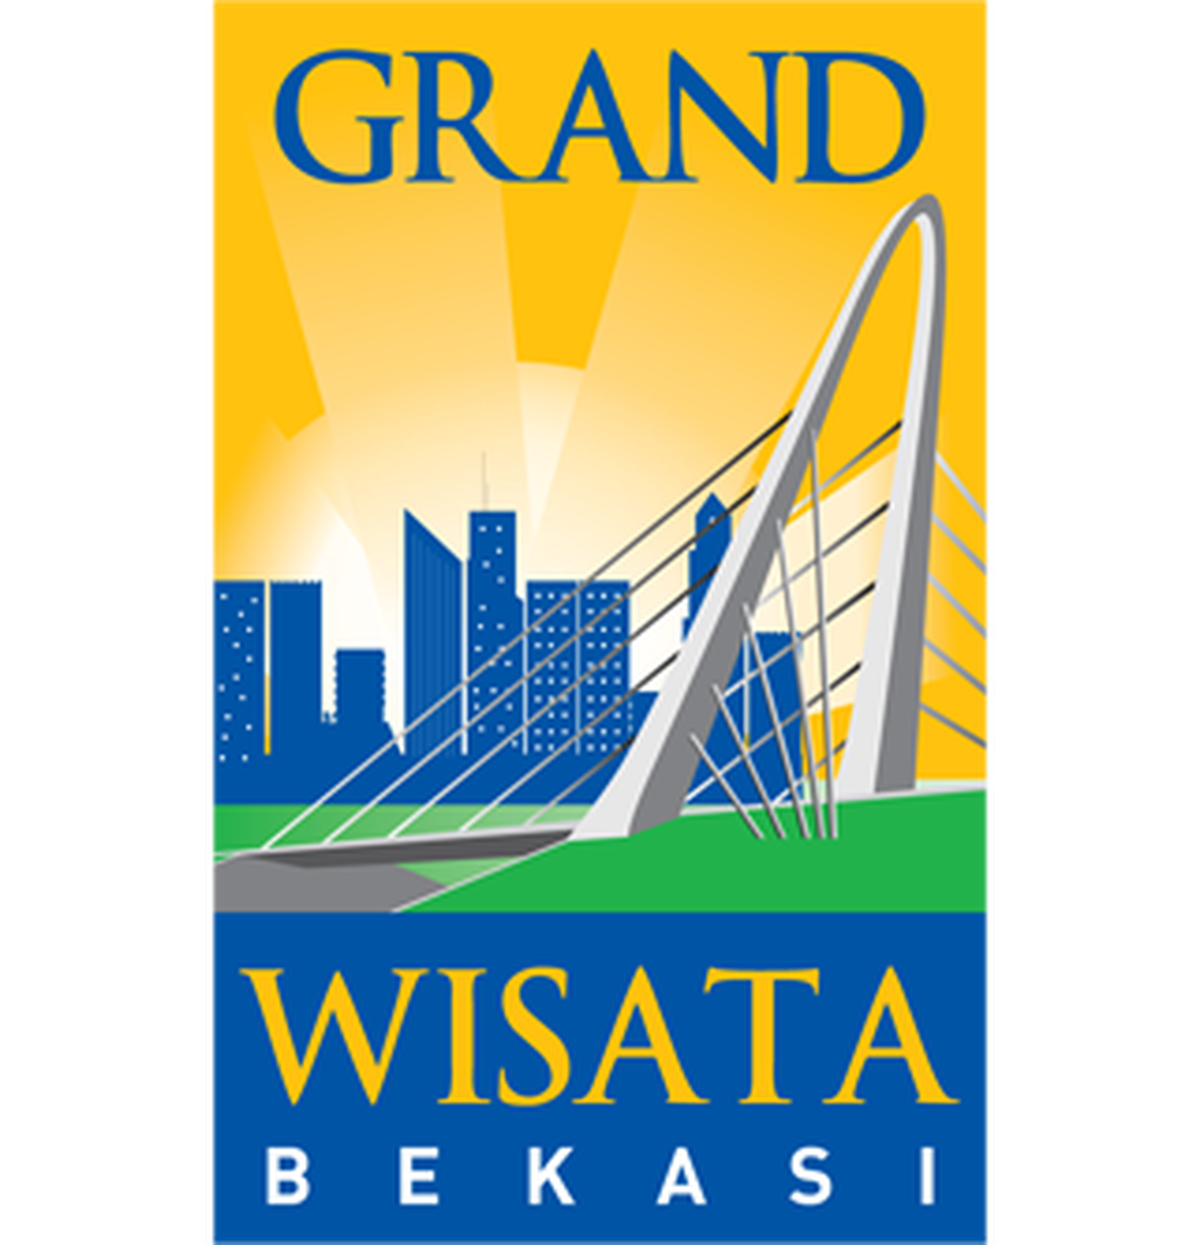 Grand Wisata Bekasi is hiring a Marketing Executive